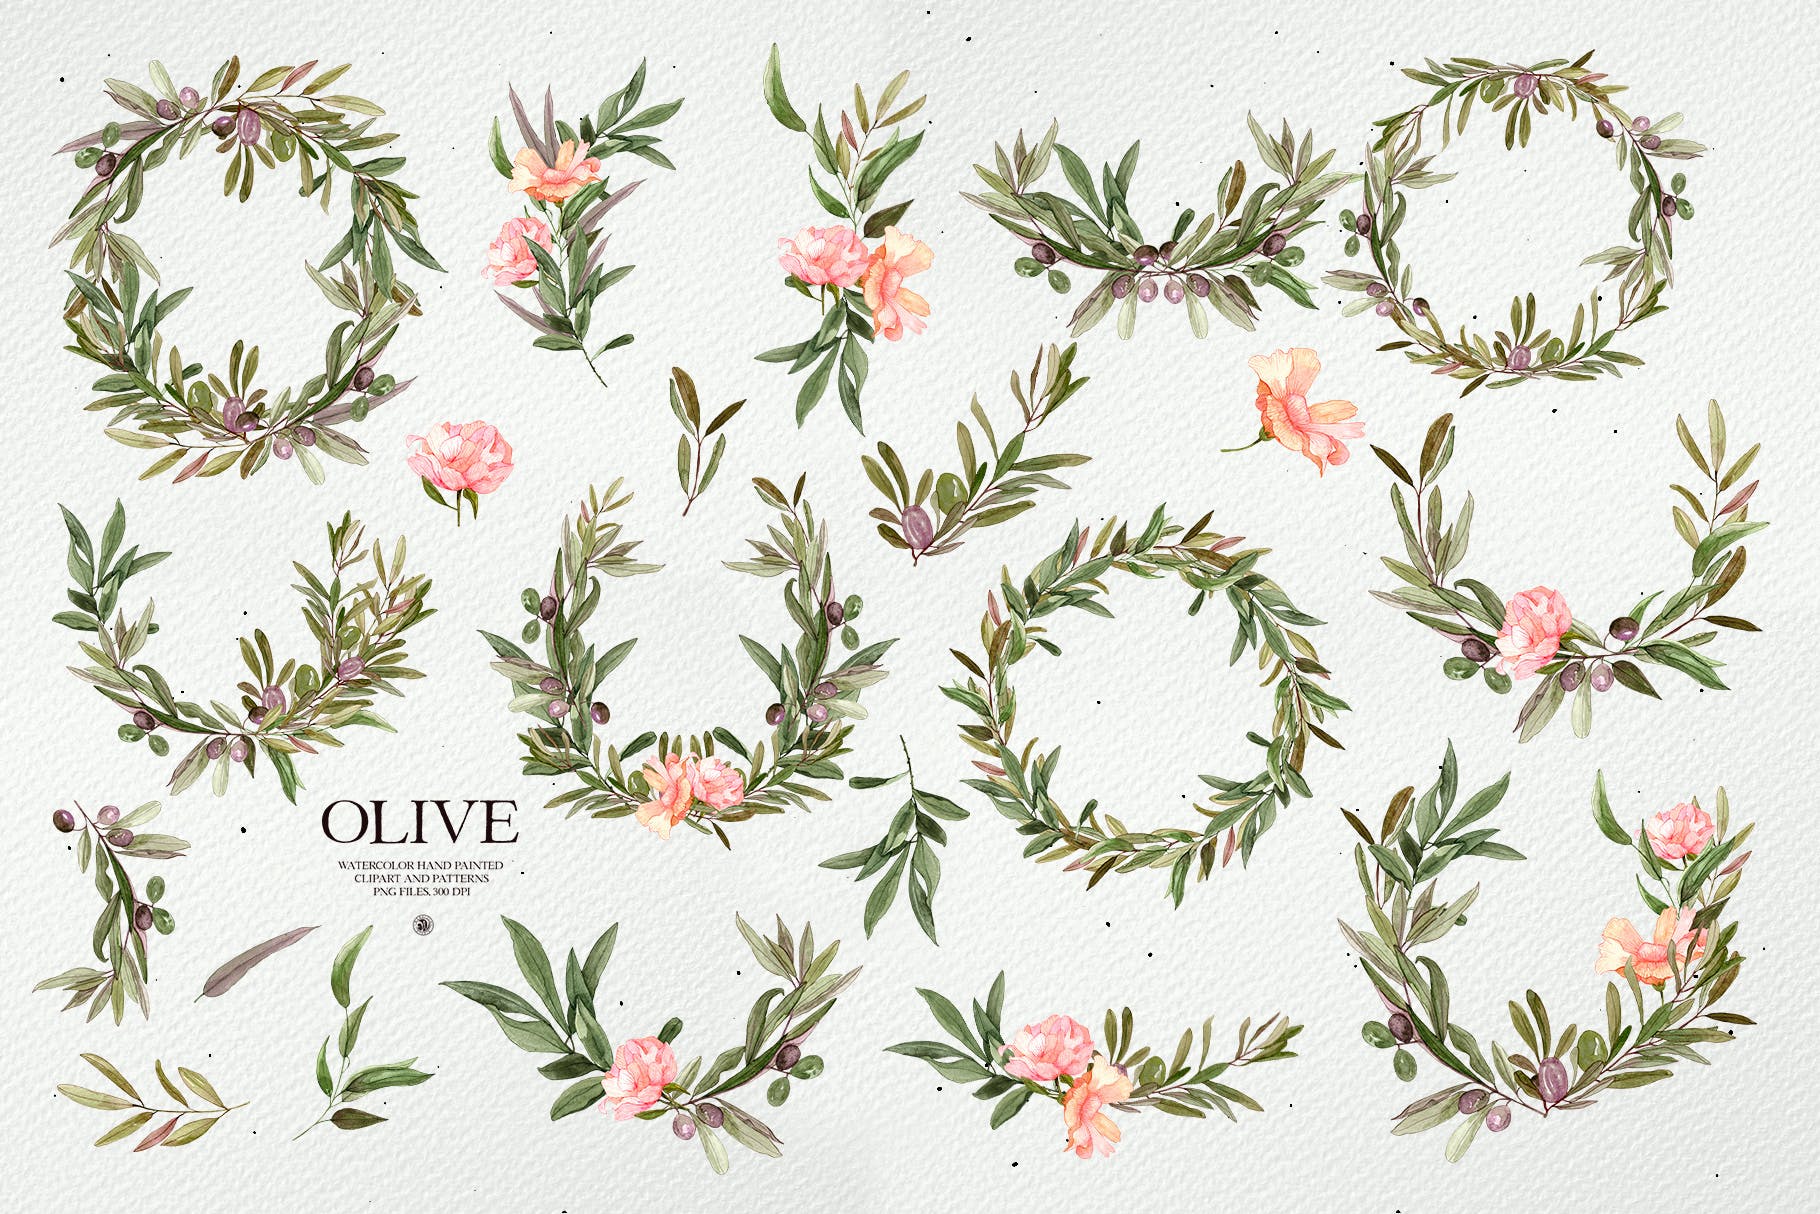 水彩橄榄框架和图案素材 Watercolor Olive – frames and patterns 图片素材 第10张